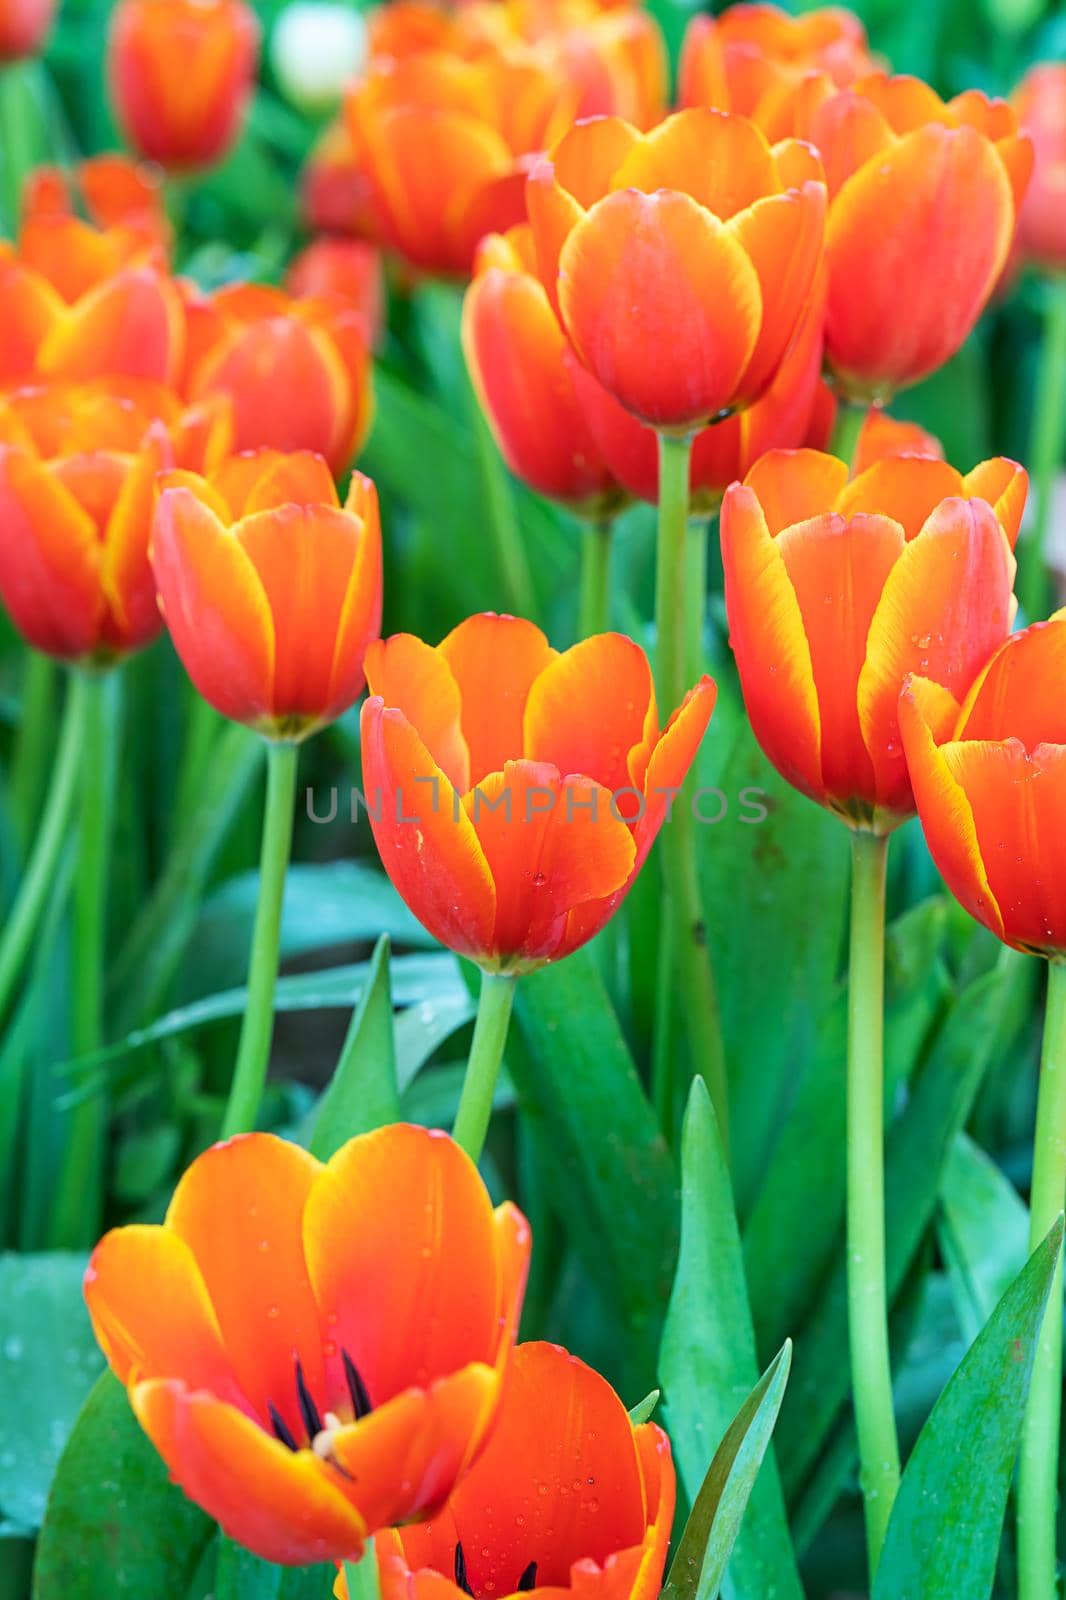 Red tulips in garden by stoonn